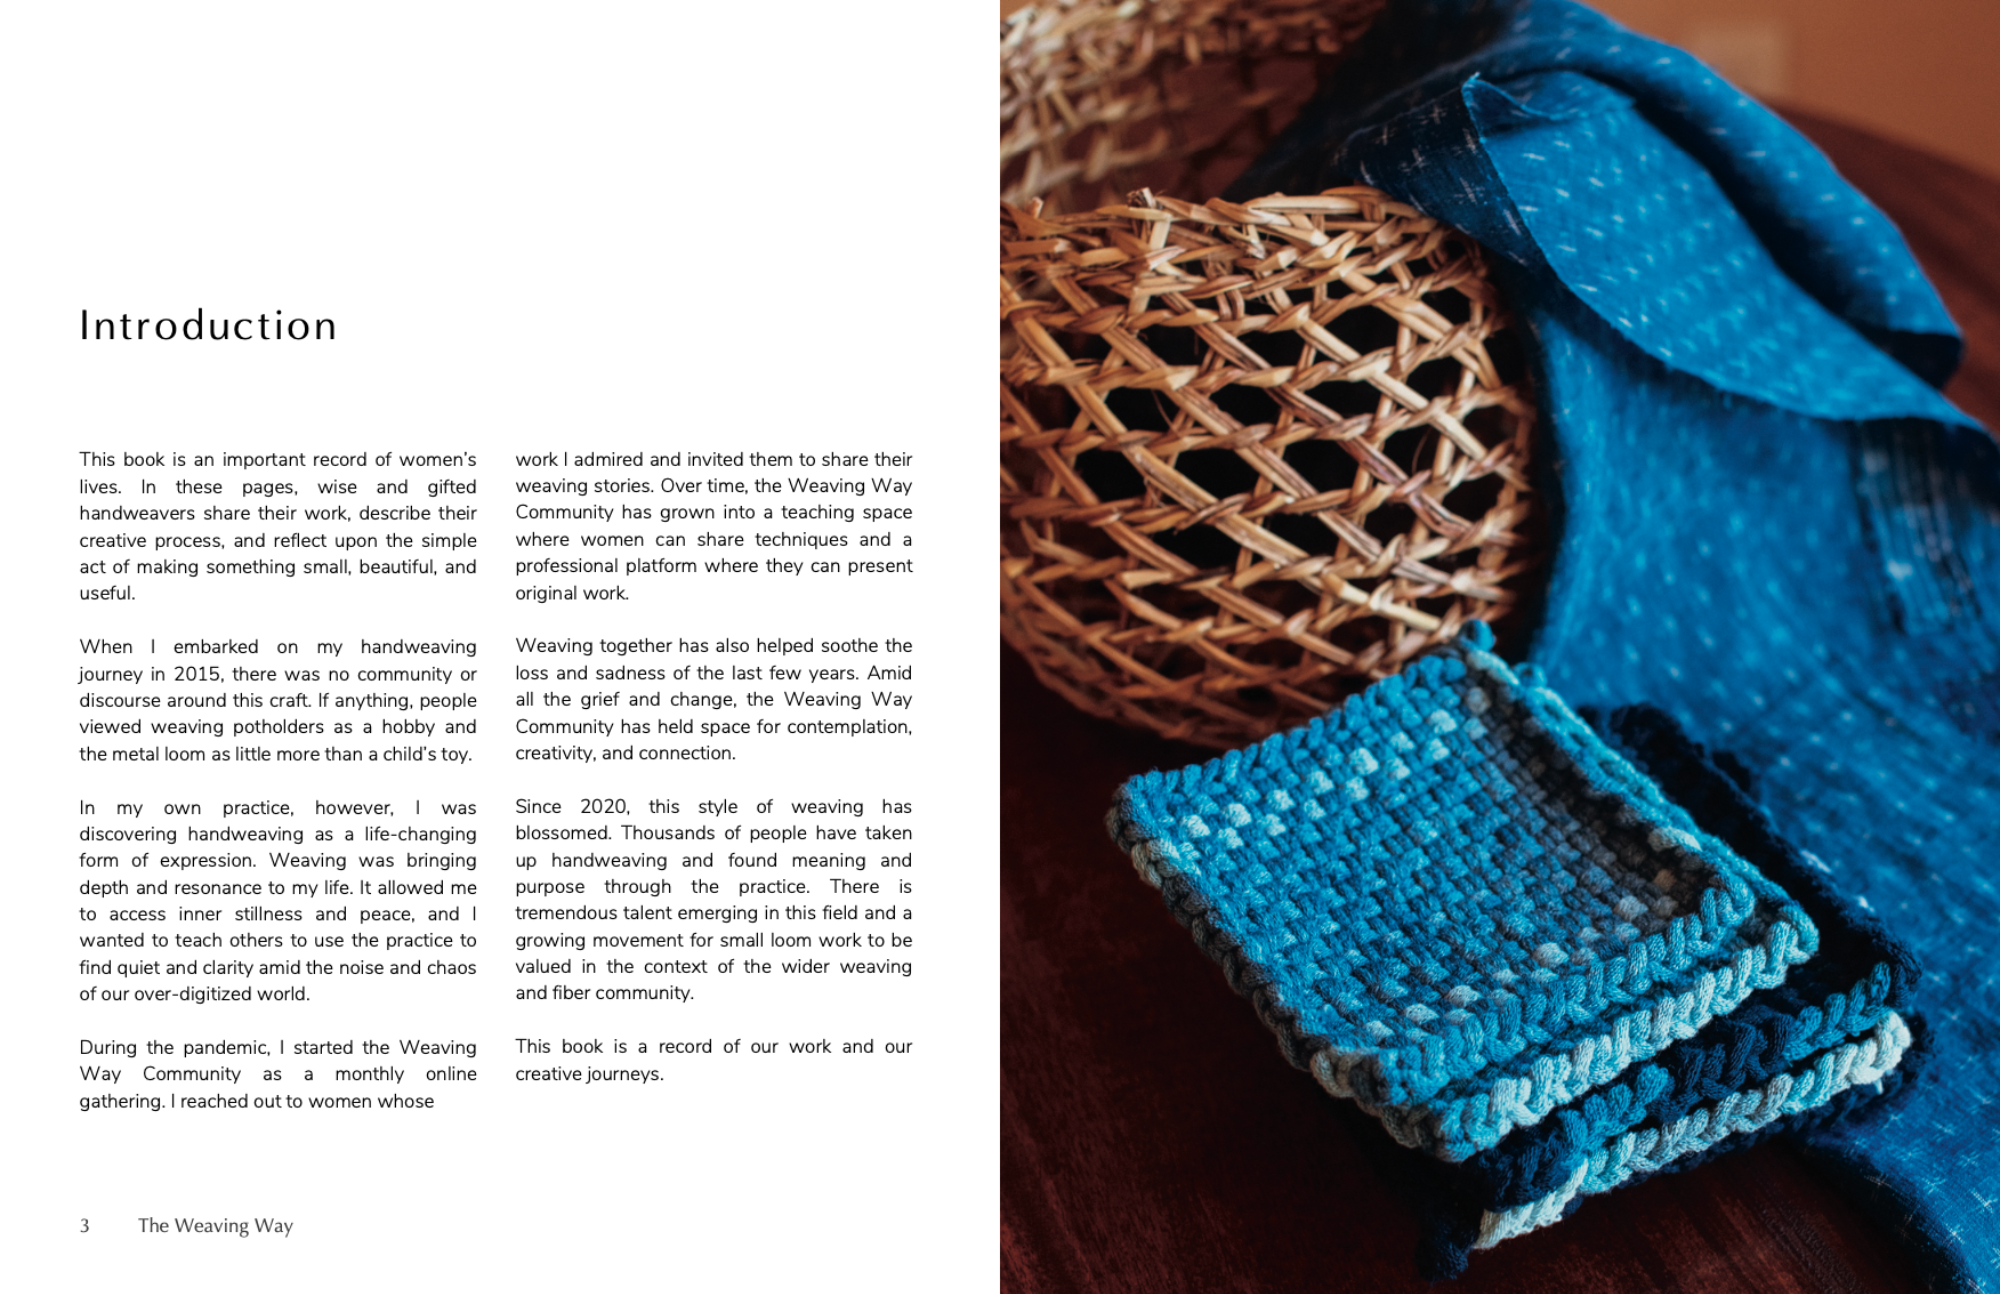 The Weaving Way - a journey of a handweaving community - gift bundles